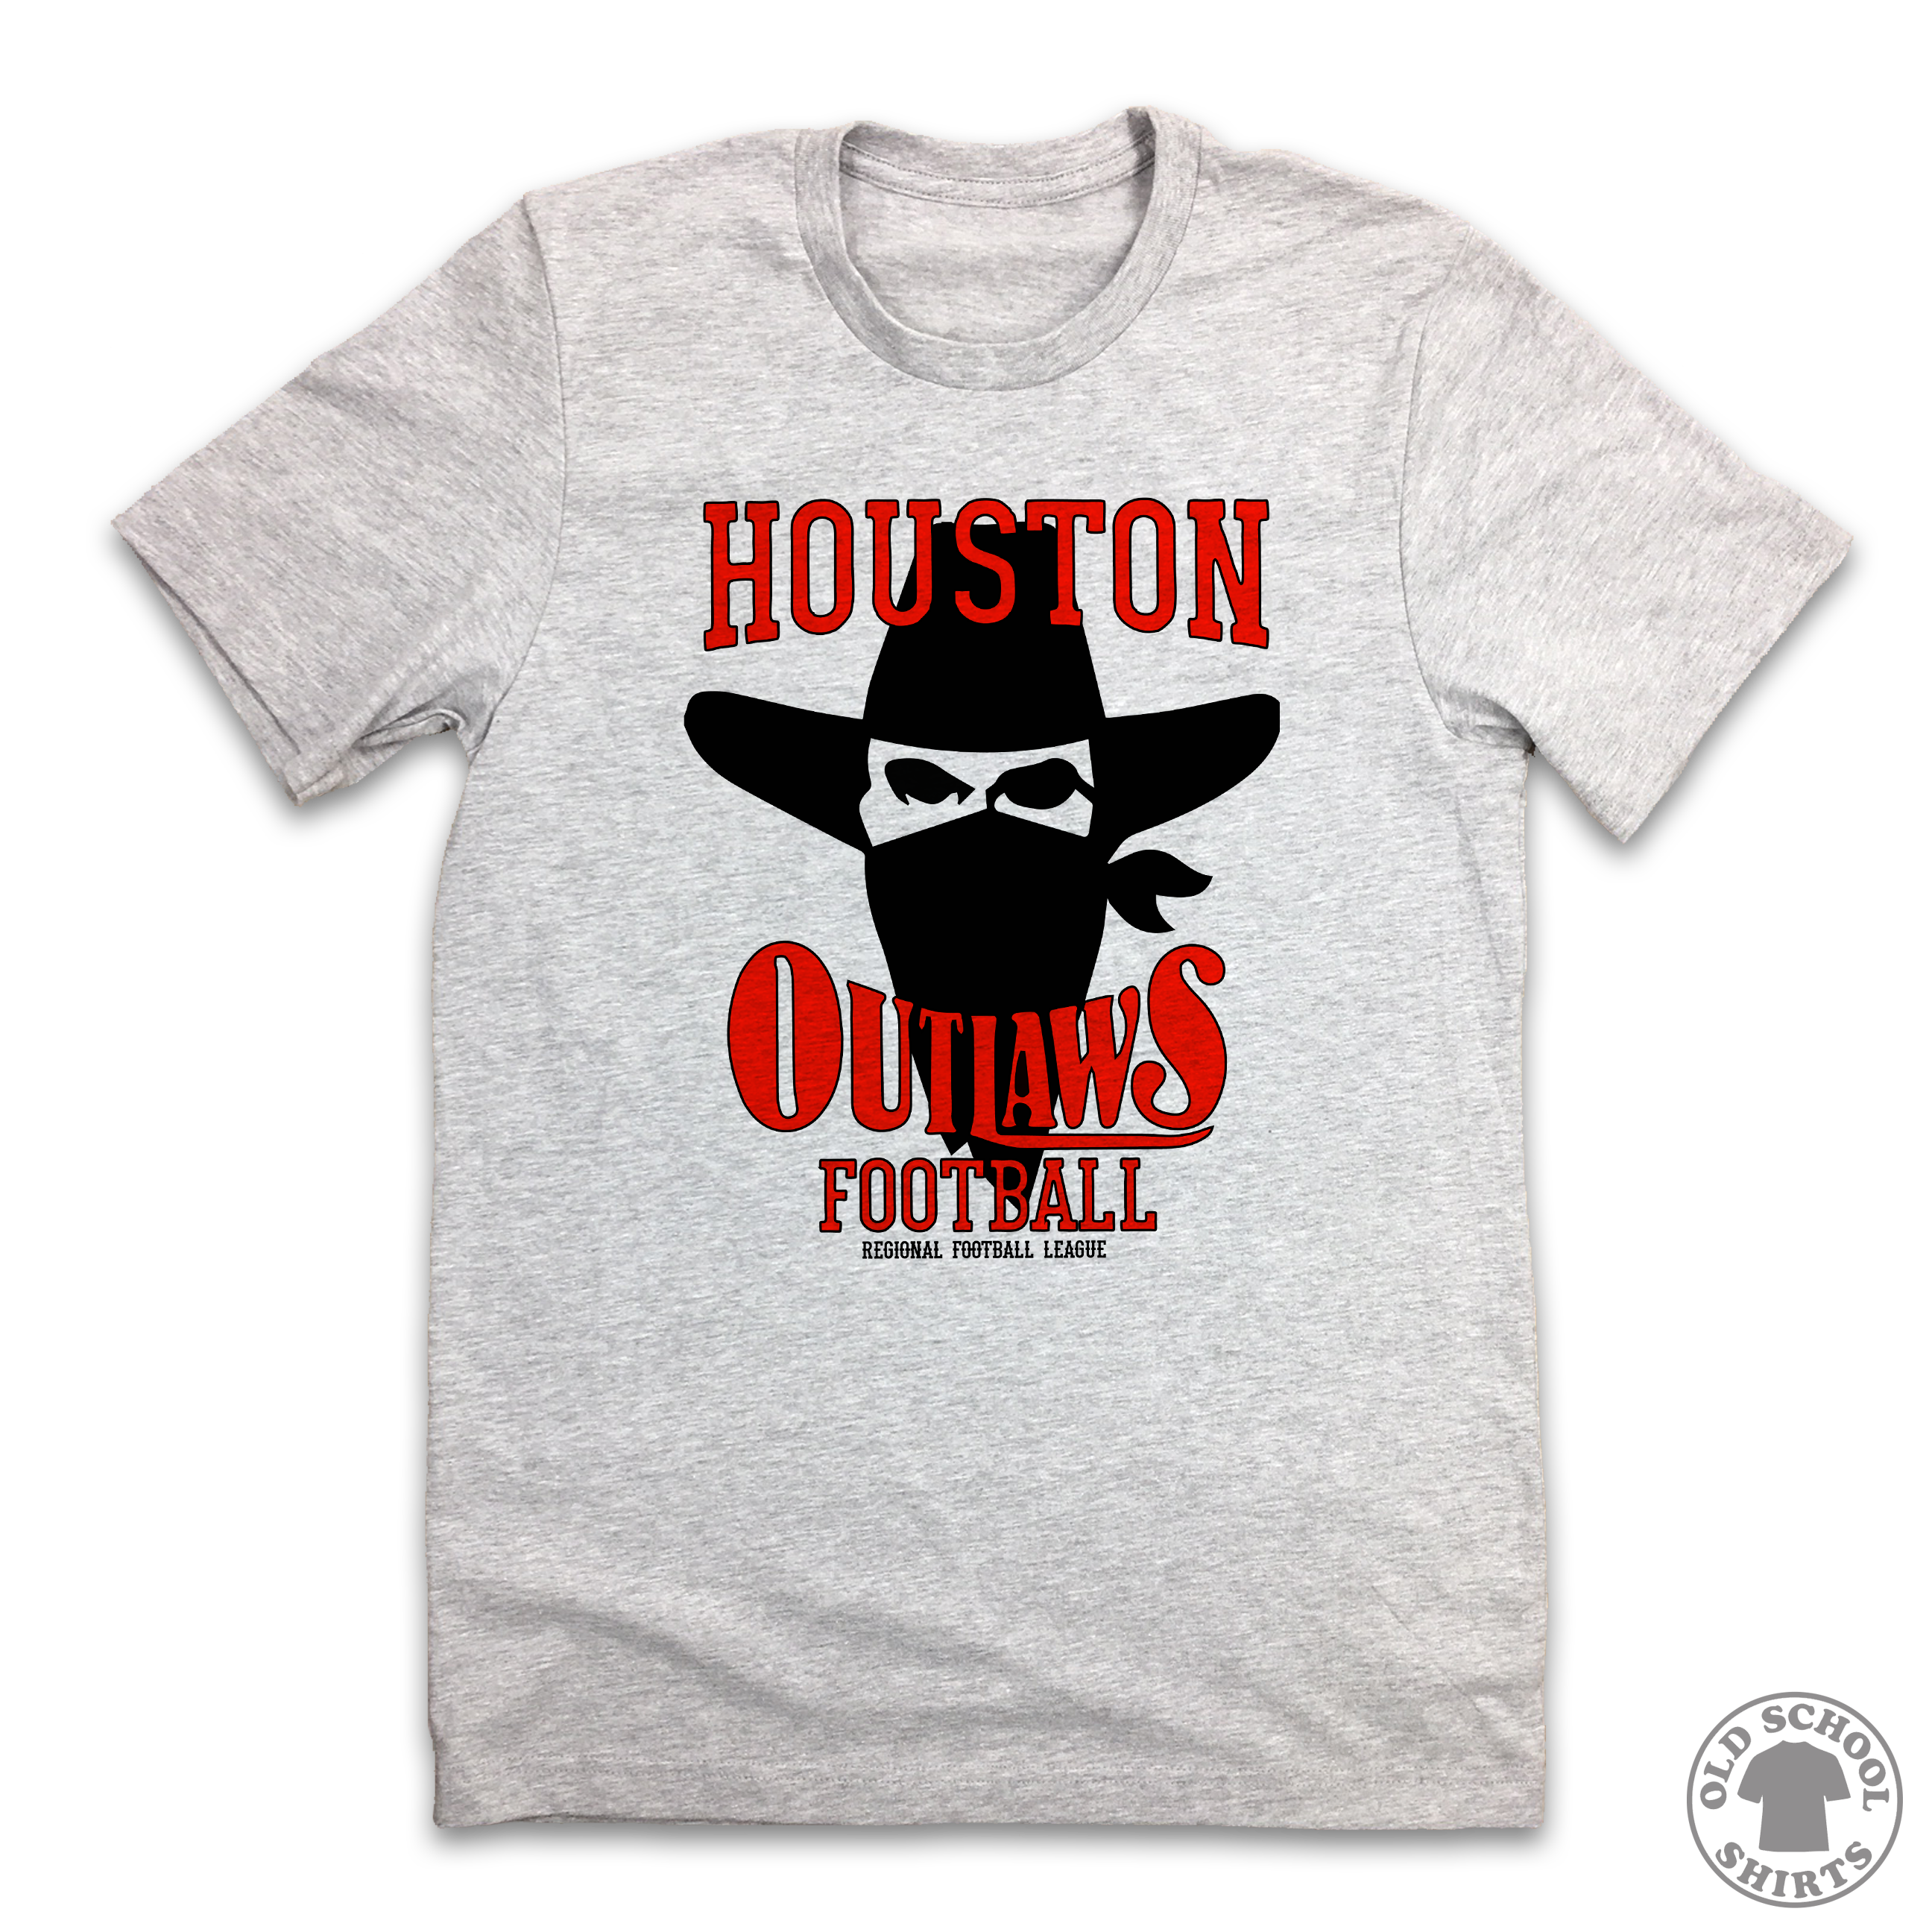 Houston Outlaws - Old School Shirts- Retro Sports T Shirts